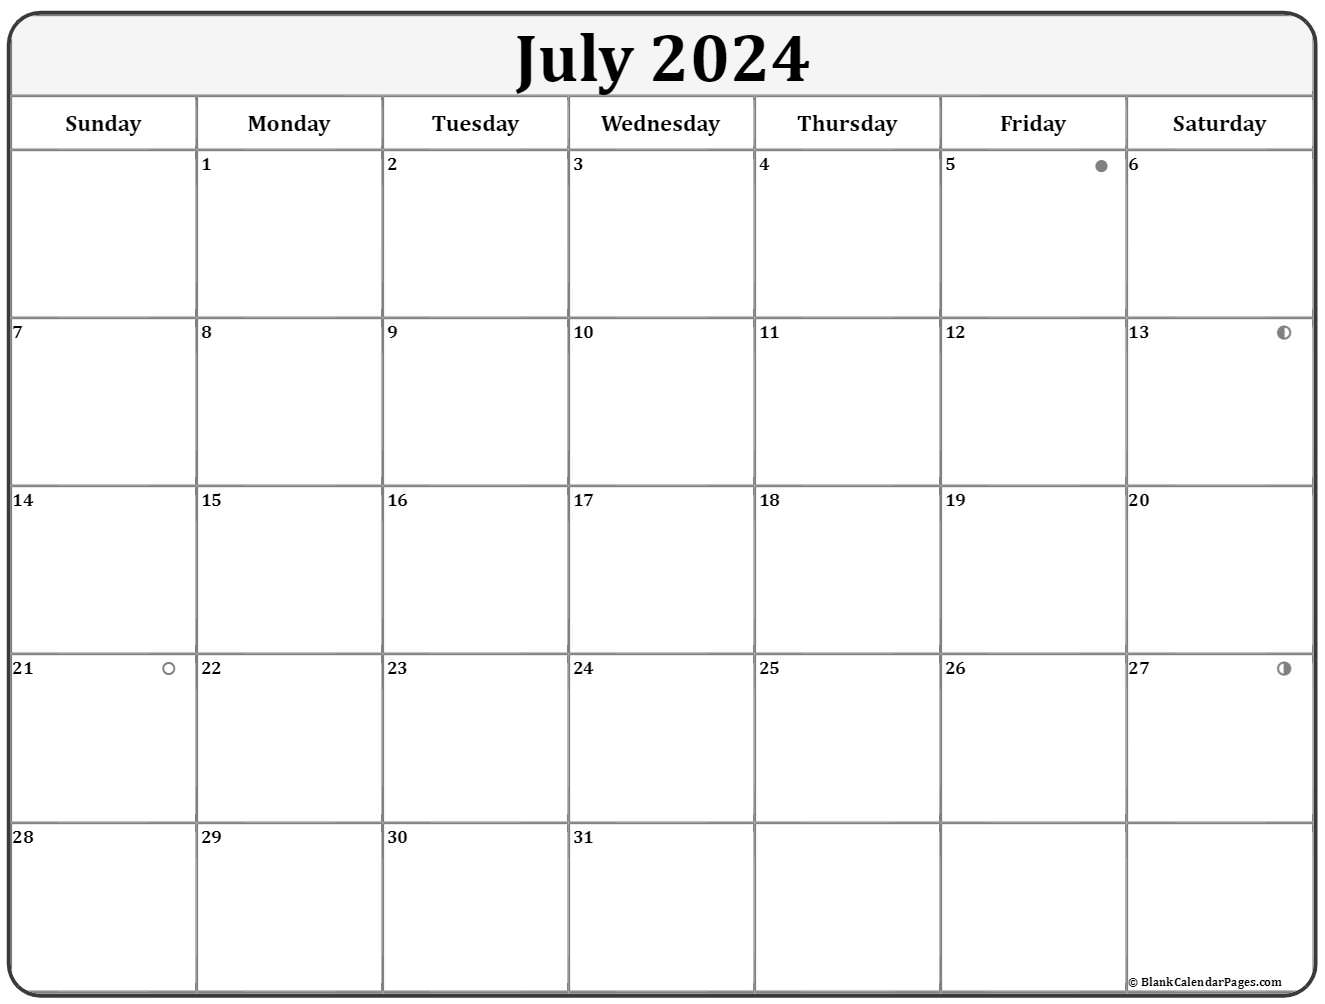 July 2024 Lunar Calendar Moon Phase Calendar